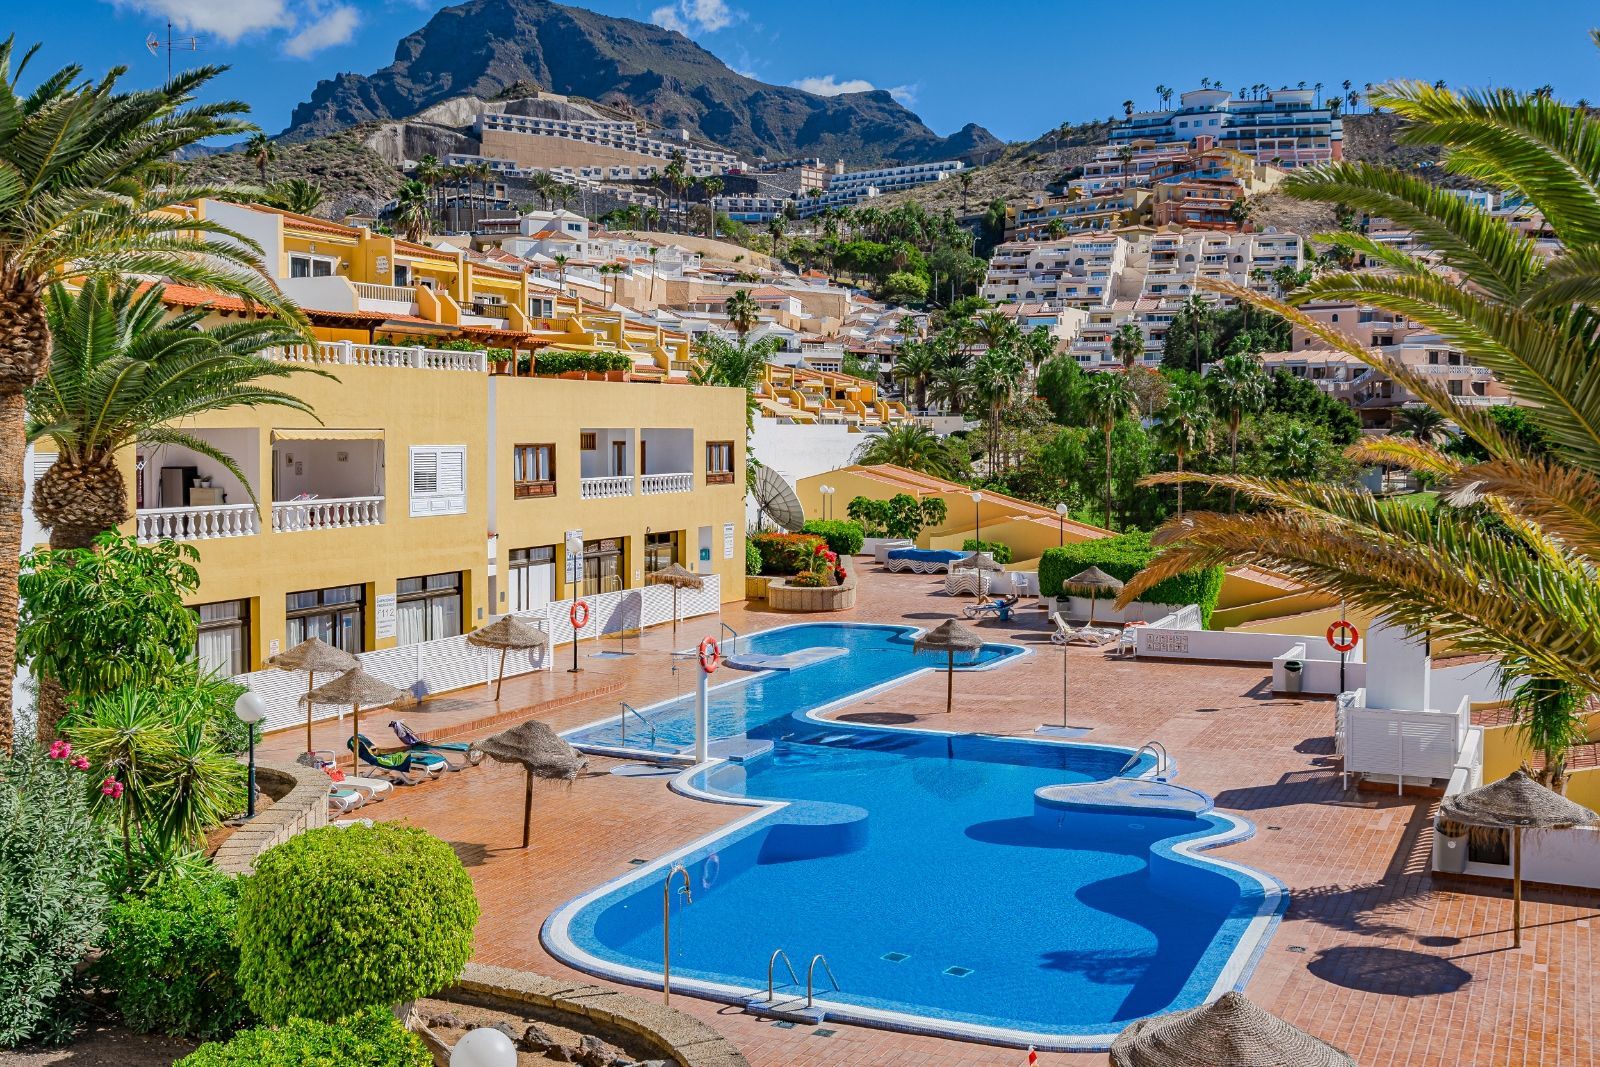 Apartment for sale in Tenerife 4